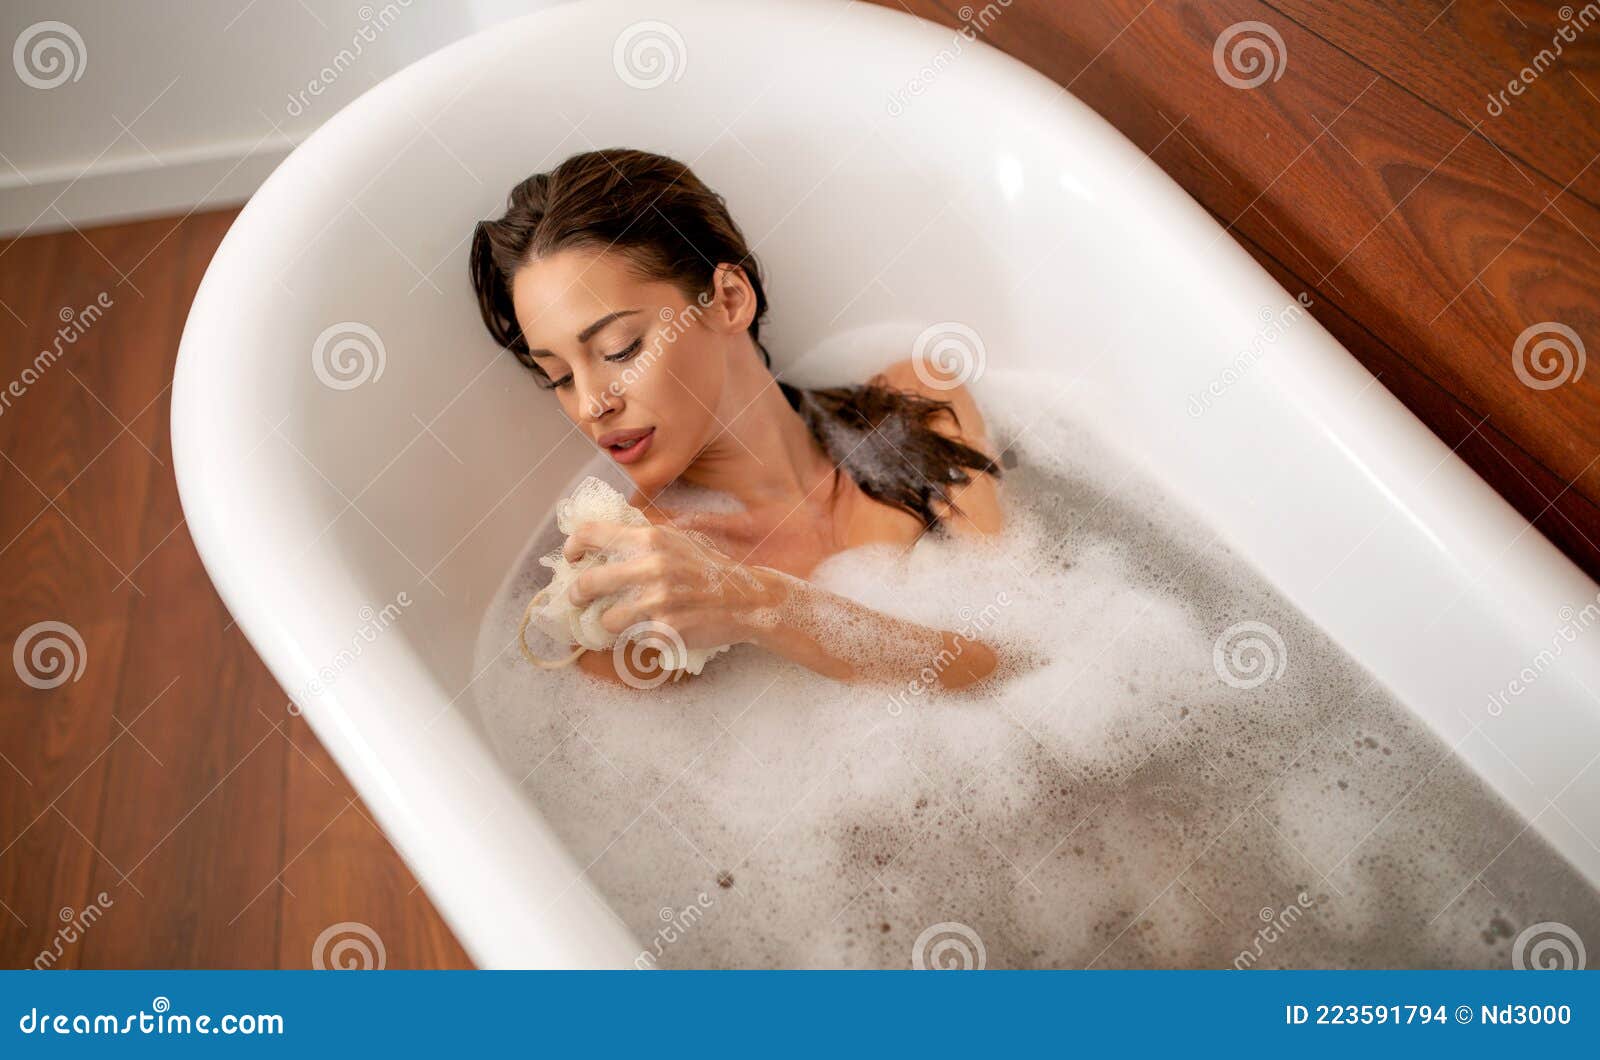 ben beddoes reccomend Hot Women In Bathtub